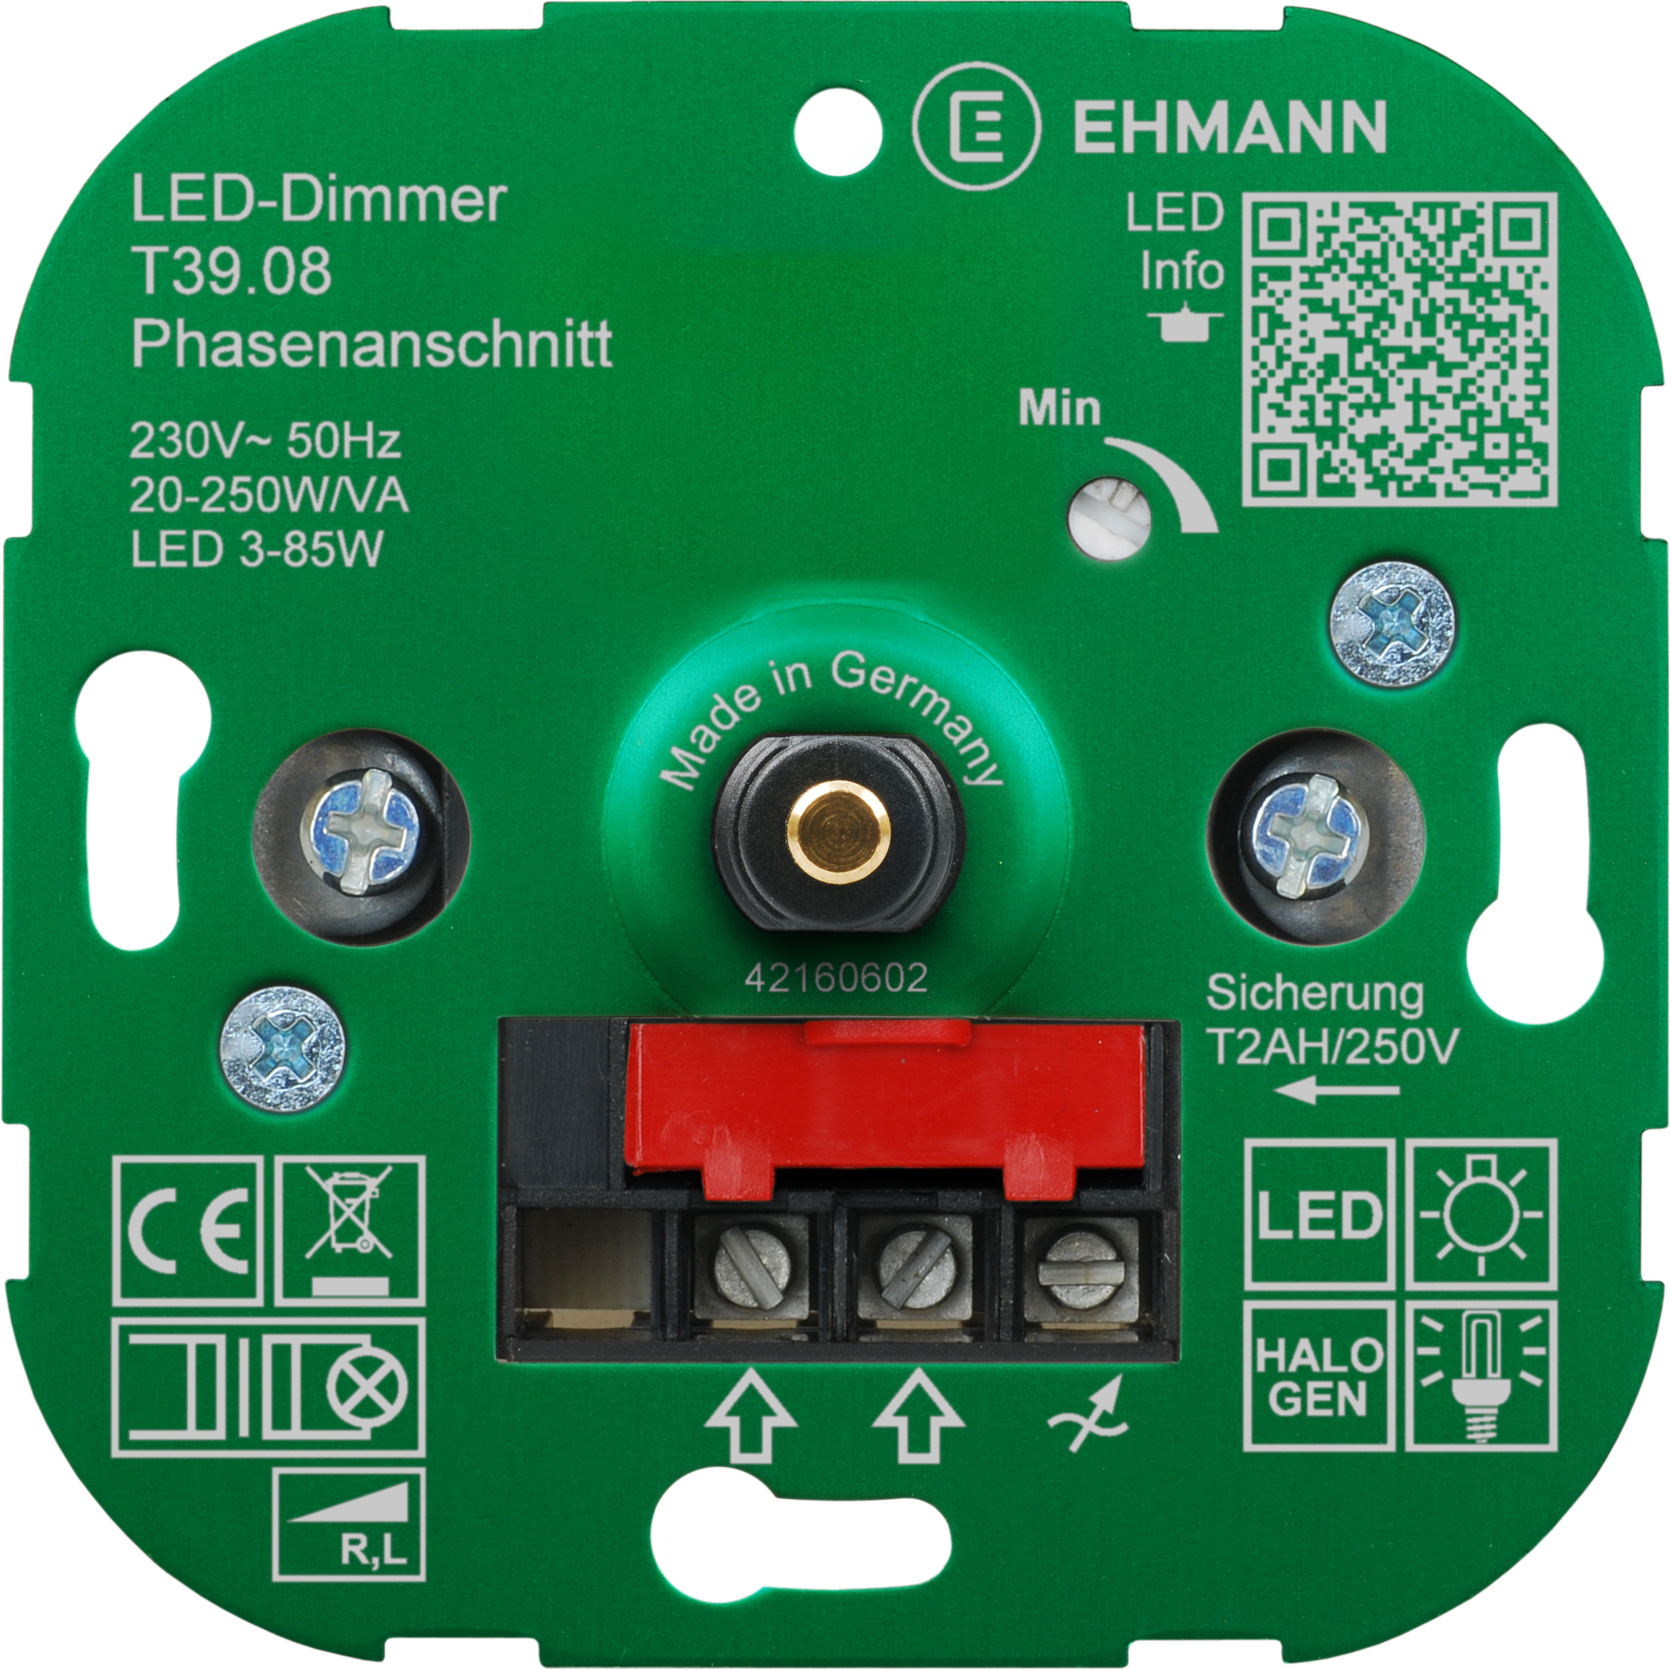 EHMANN 3900x0800 T39.08 Unterputz-Dimmer, Phasenanschnitt, 230 V, 50 Hz, Leistung: LED 3-85 W, 20-250 W/VA, inkl. Schalterprogramm-Adapter